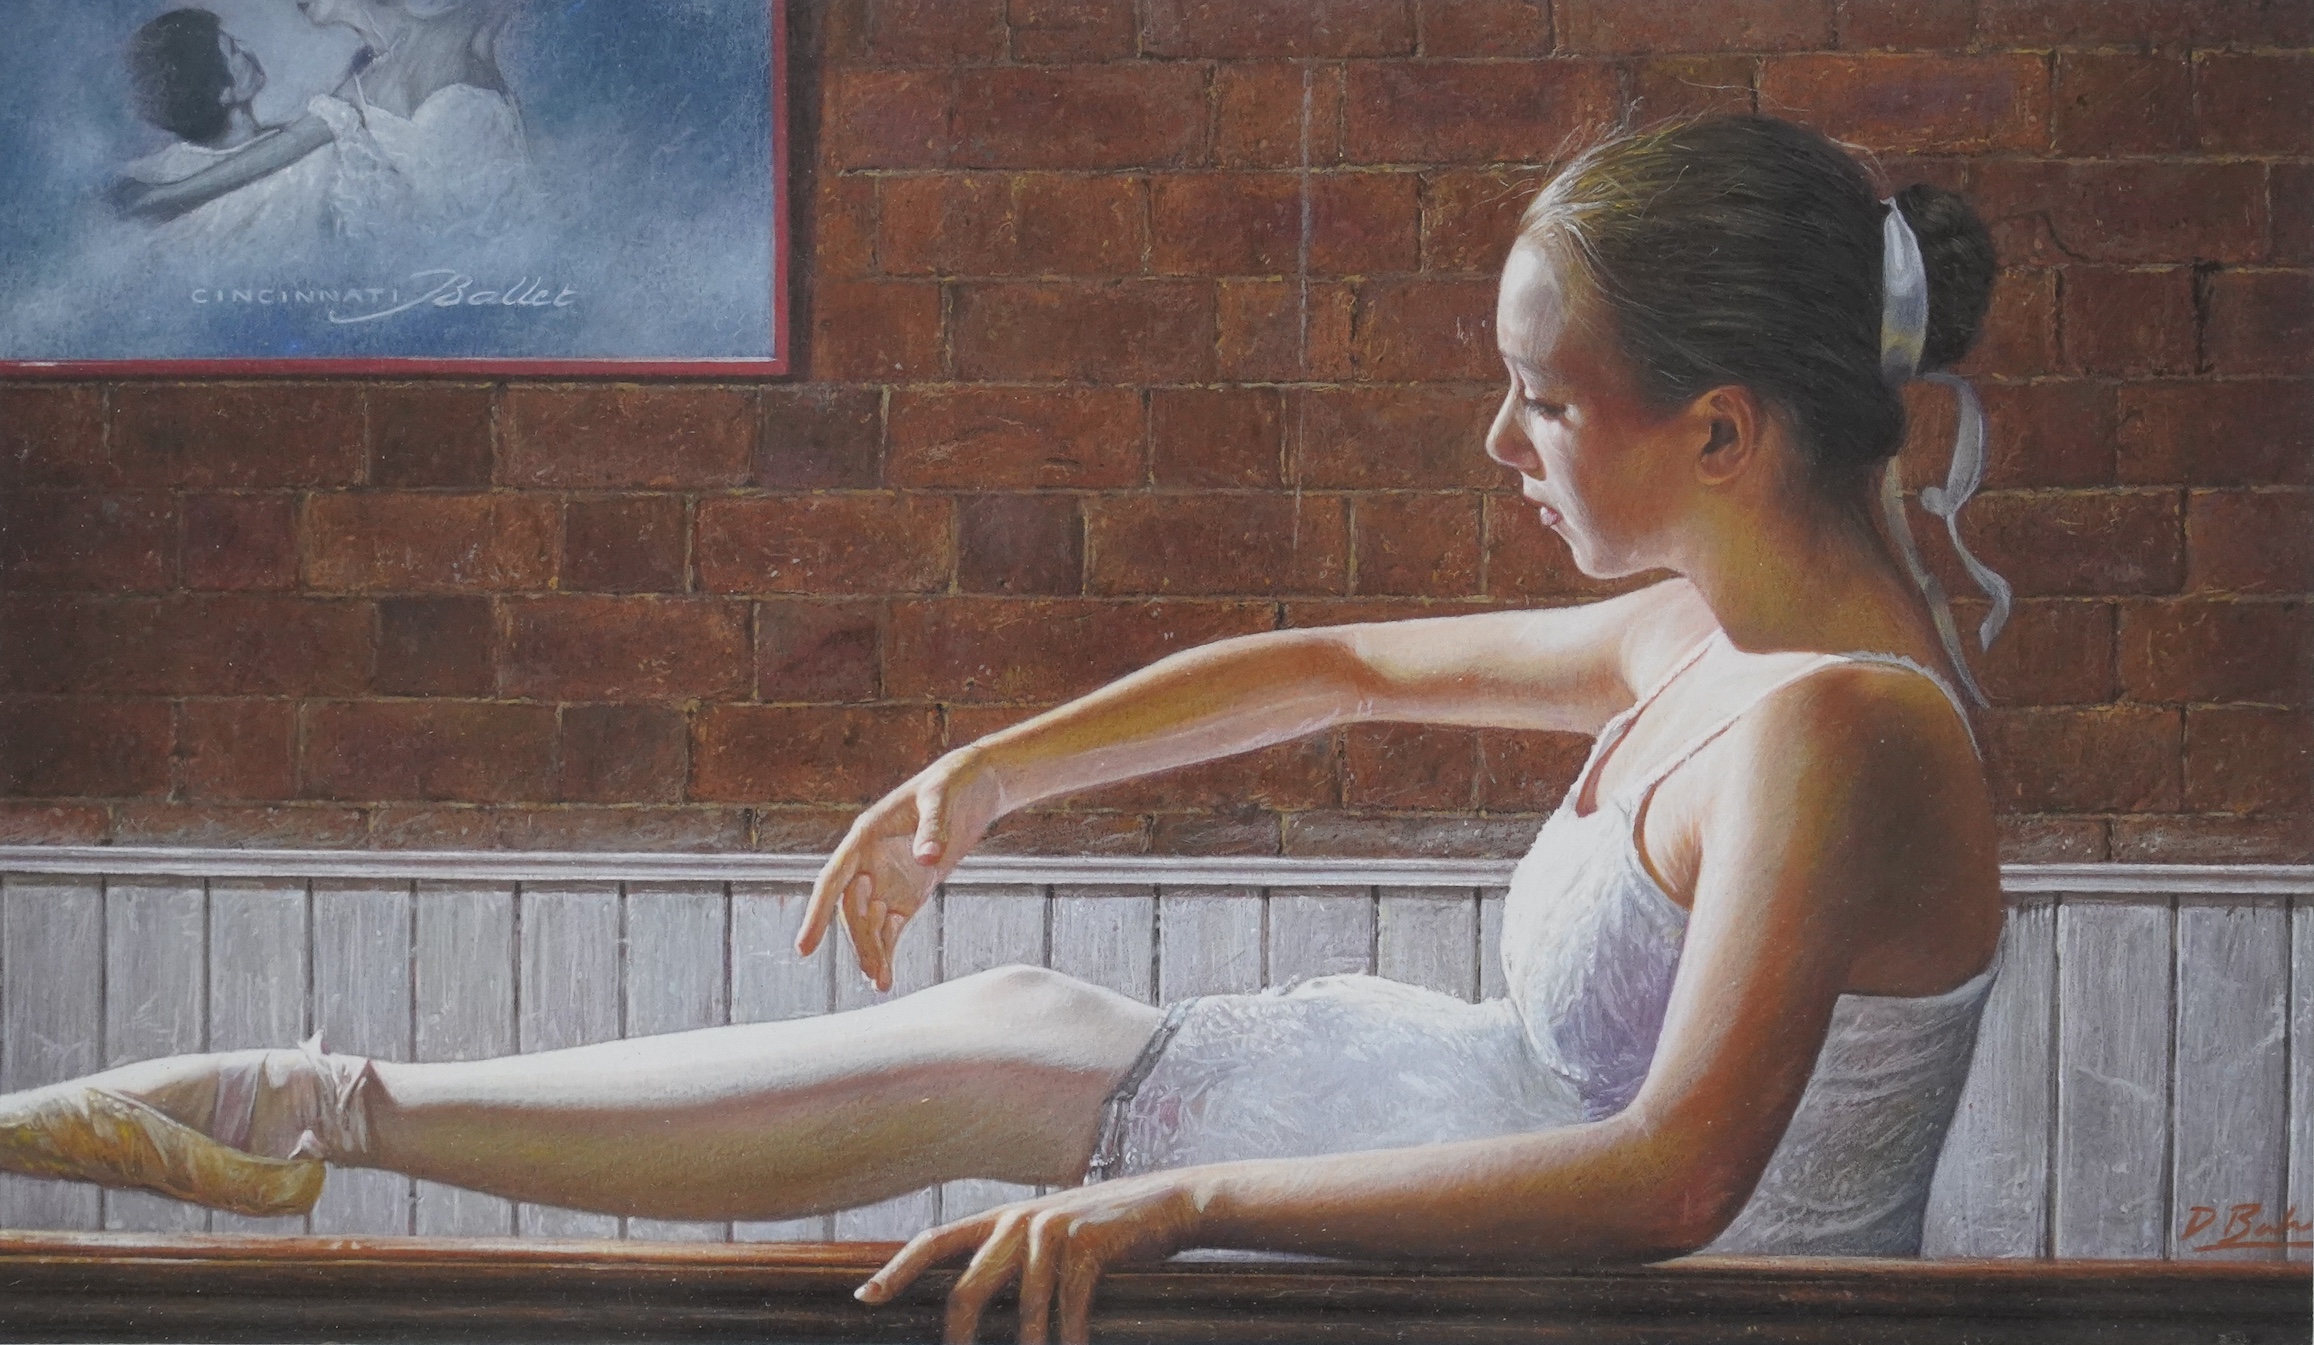 Darren Baker (b.1976), mixed media and pastel, Study of a ballerina, signed, 17 x 28cm